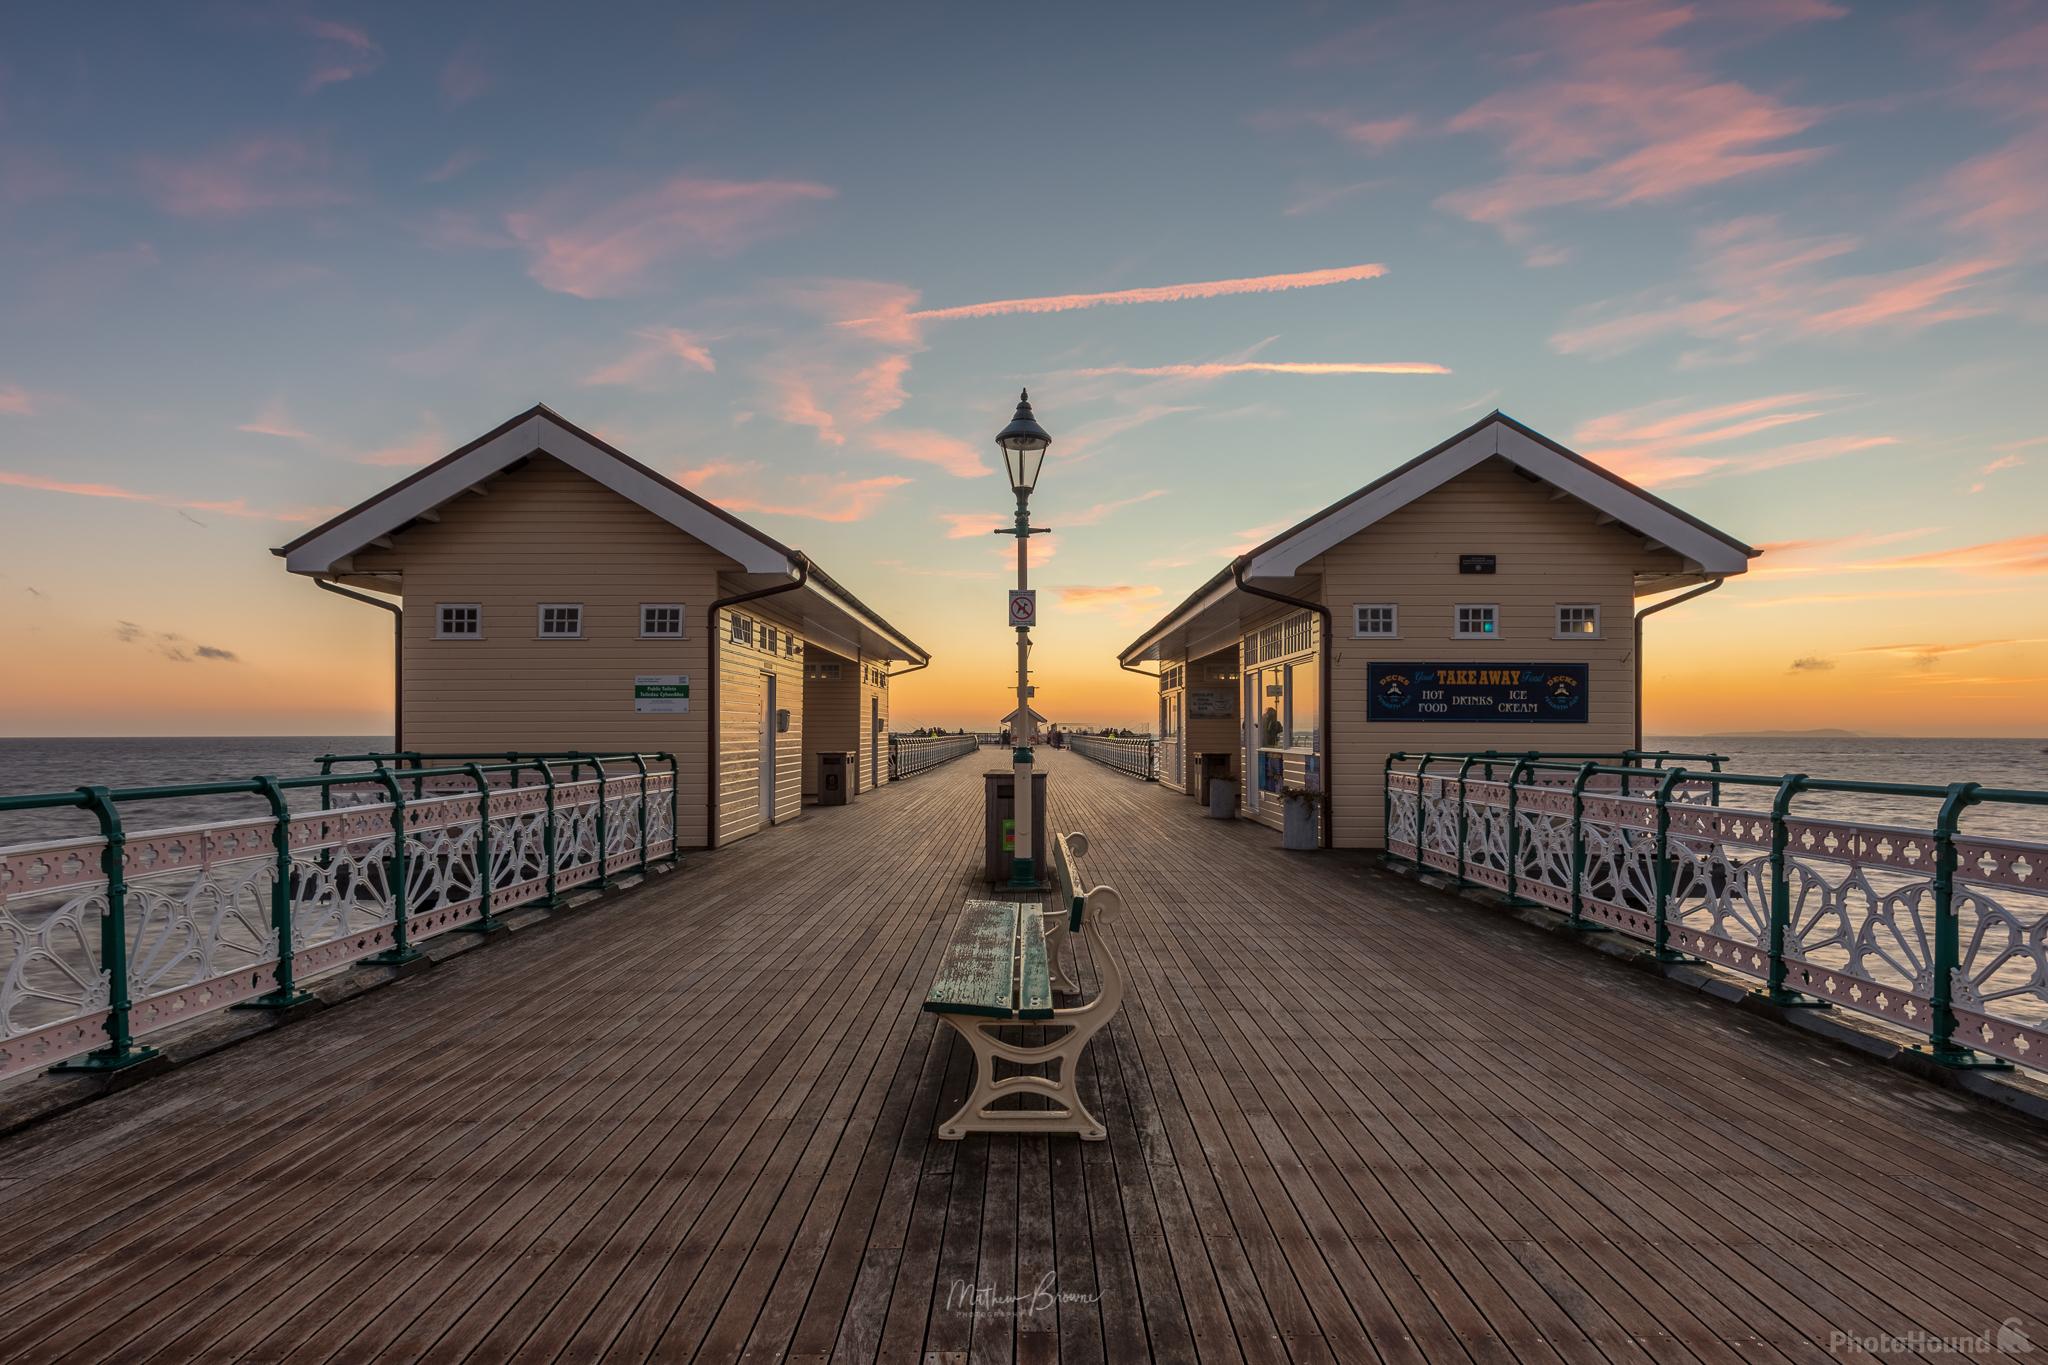 Image of Penarth Pier by Mathew Browne